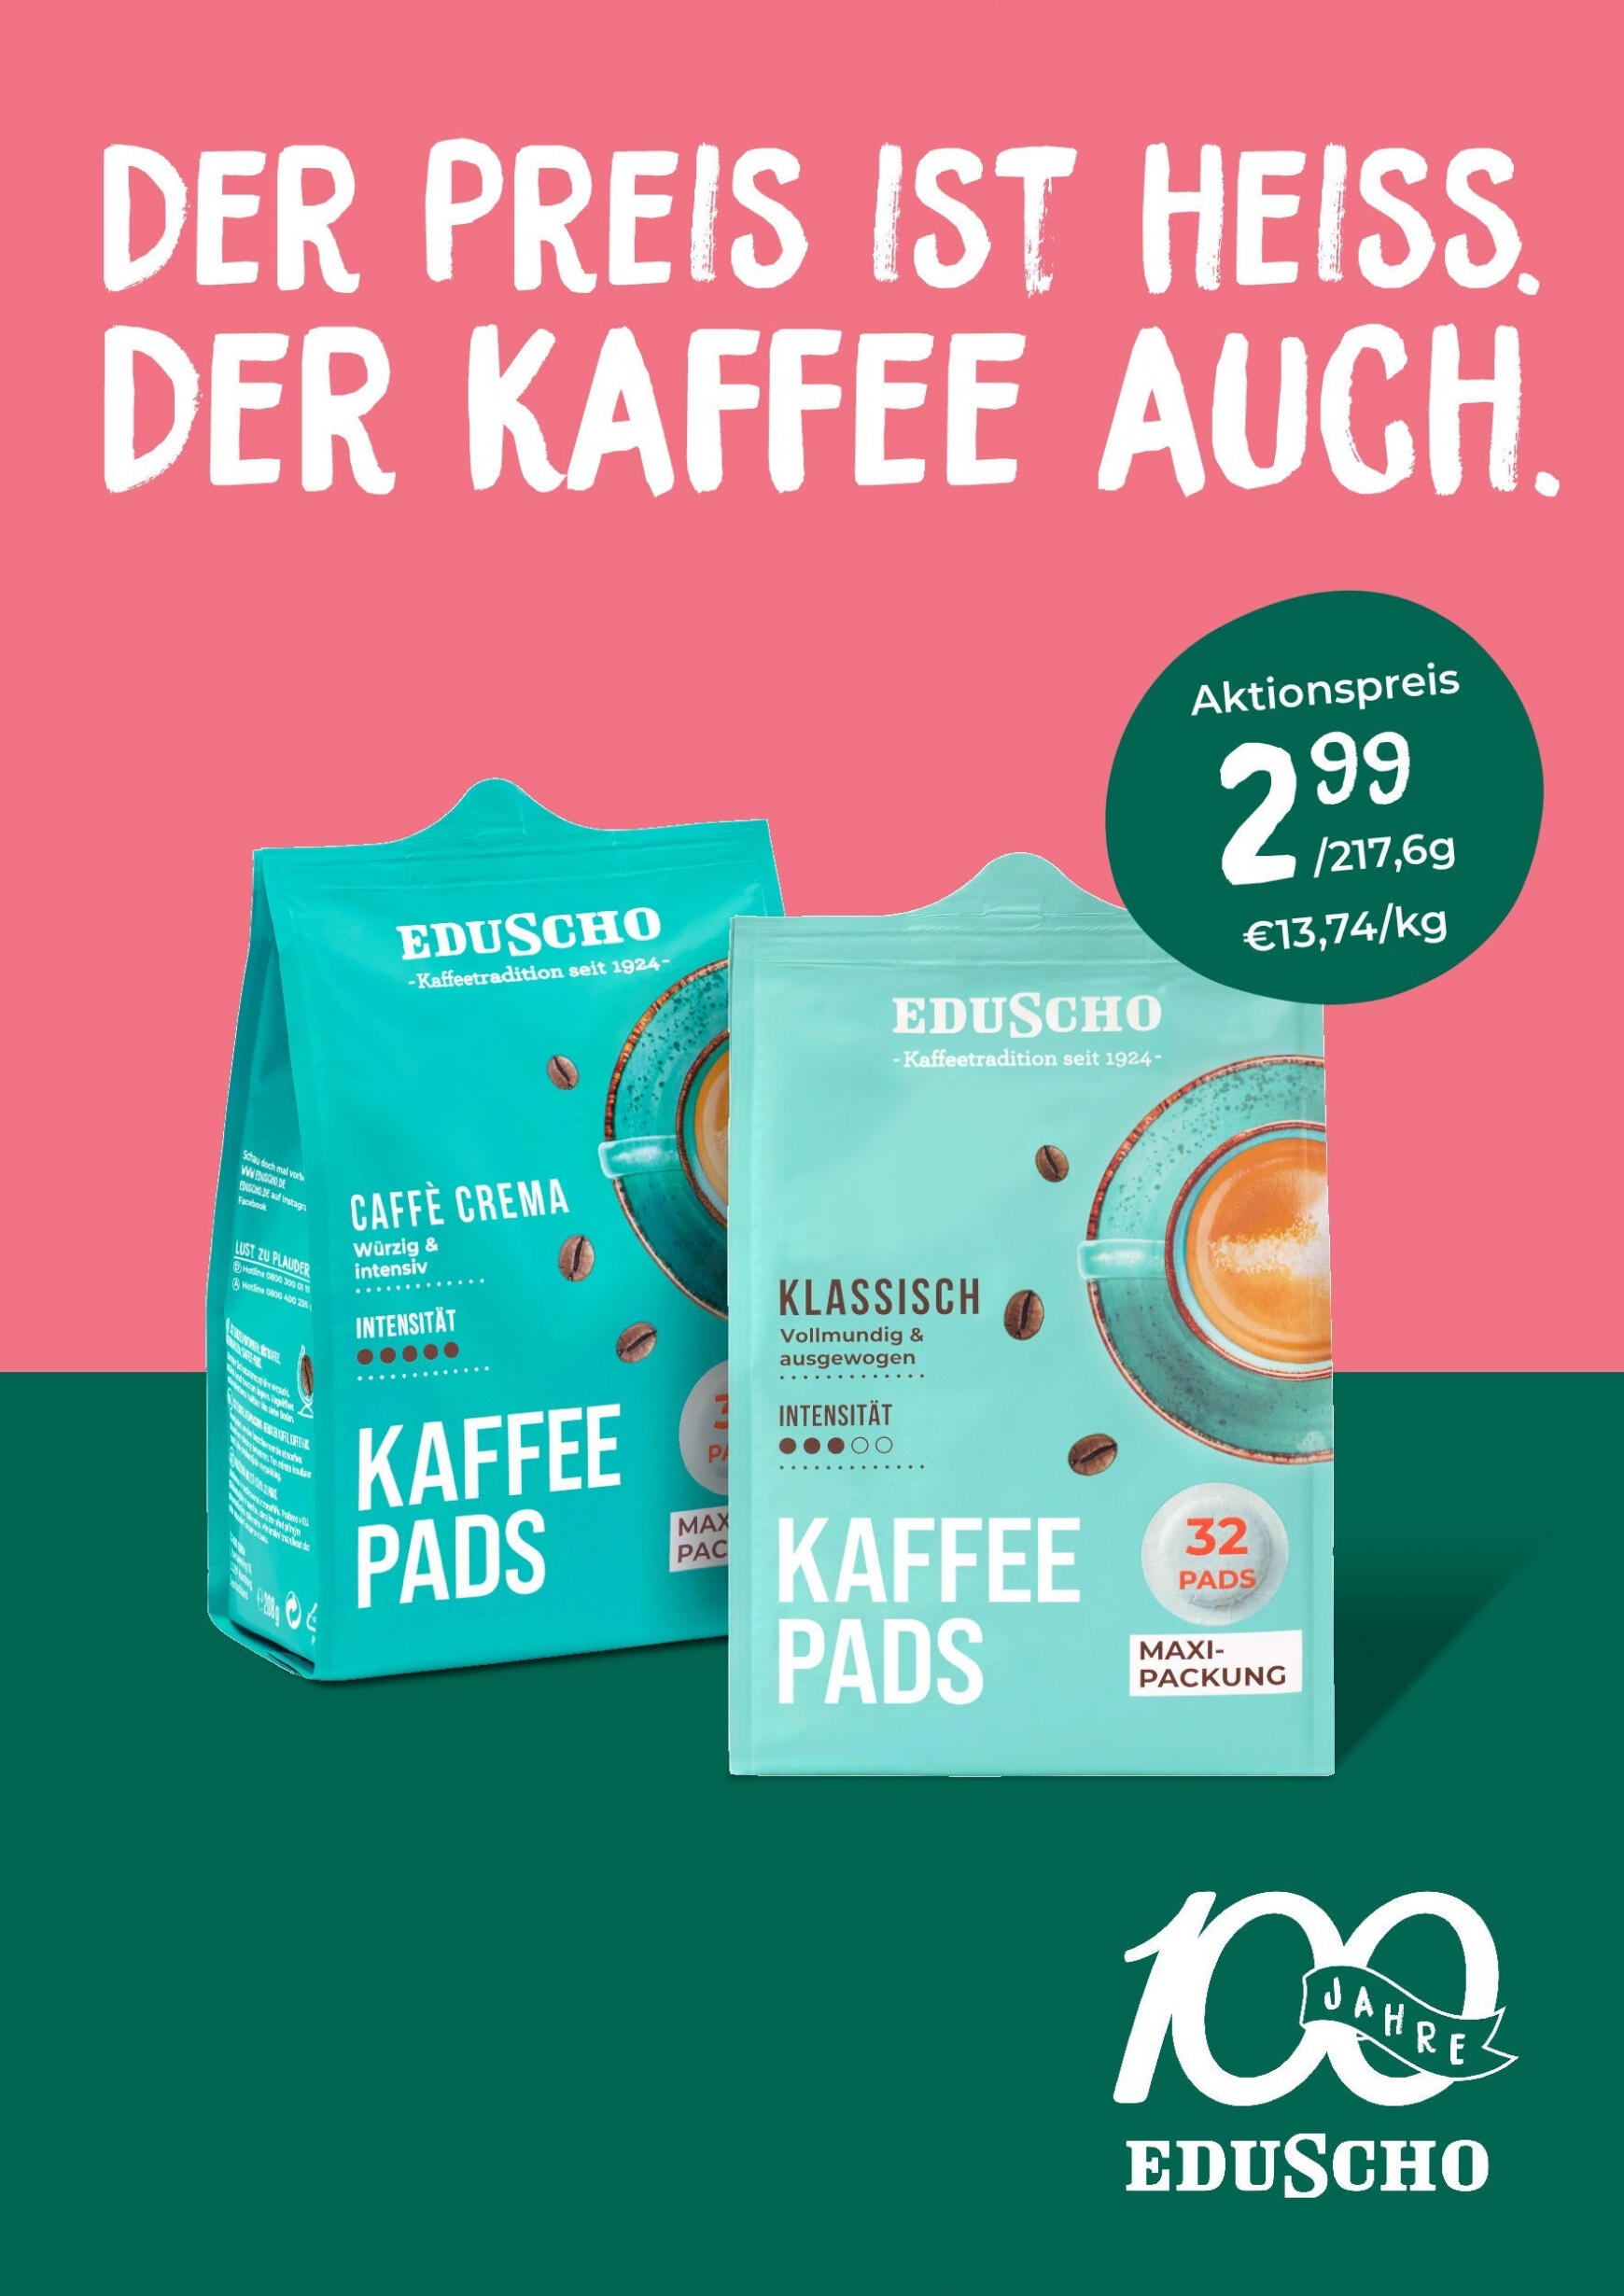 tchibo - Flyer Tchibo - Kaffee aktuell 15.05. - 26.05. - page: 1